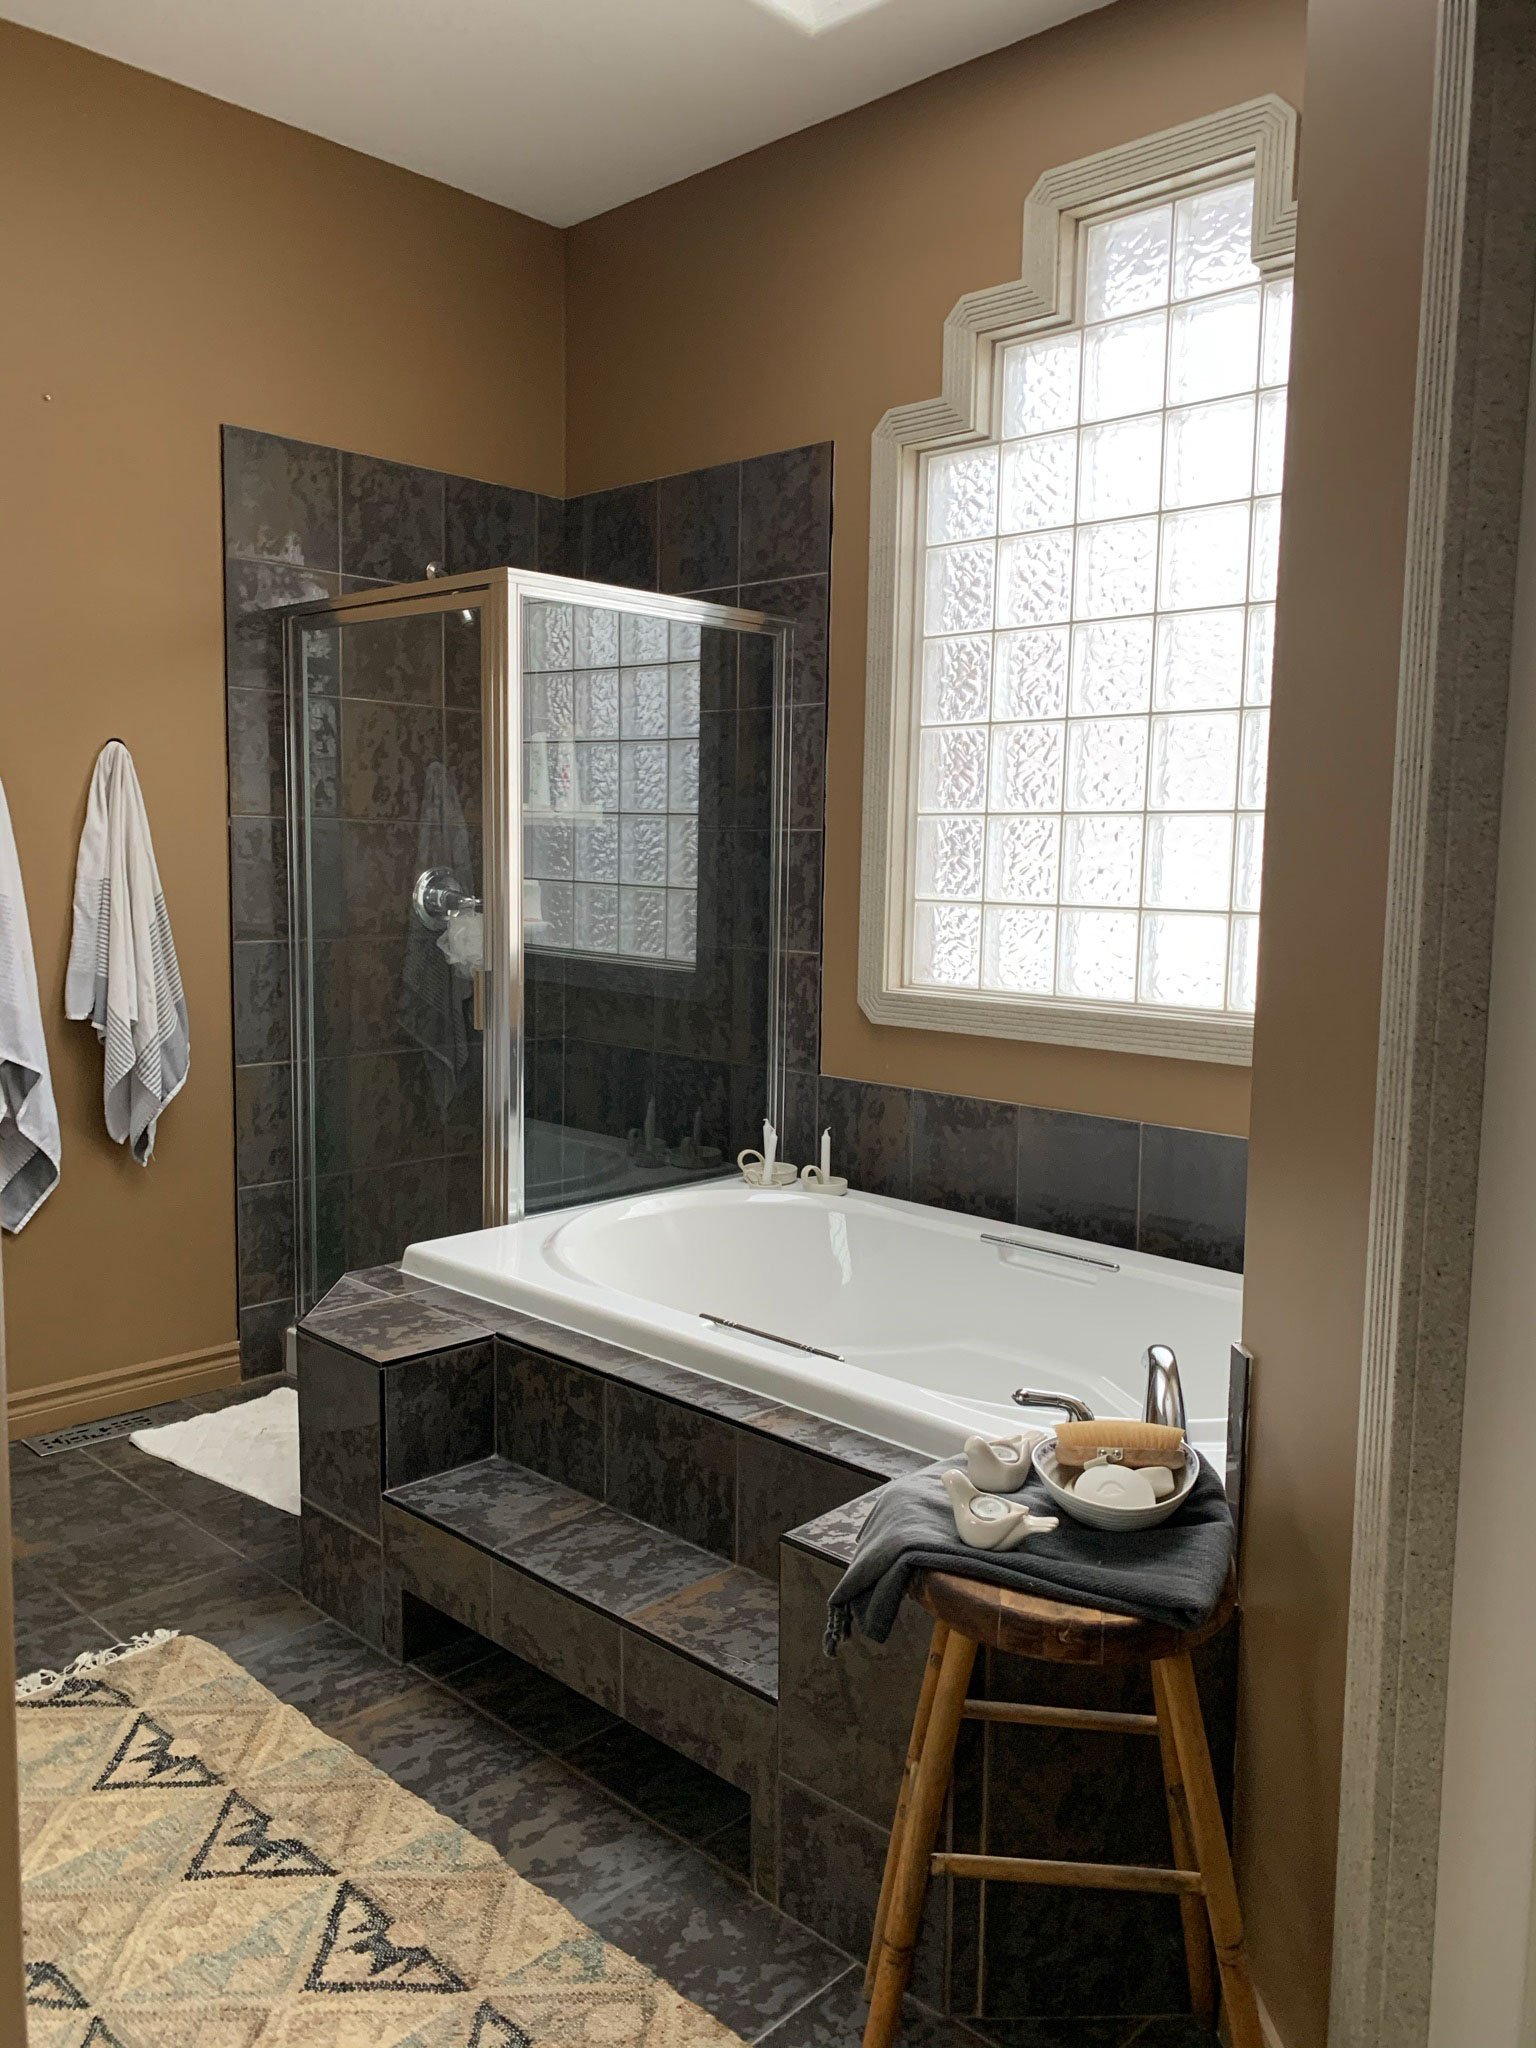 ensuite bathroom with large grey tiled tub, grey tile, glass block window